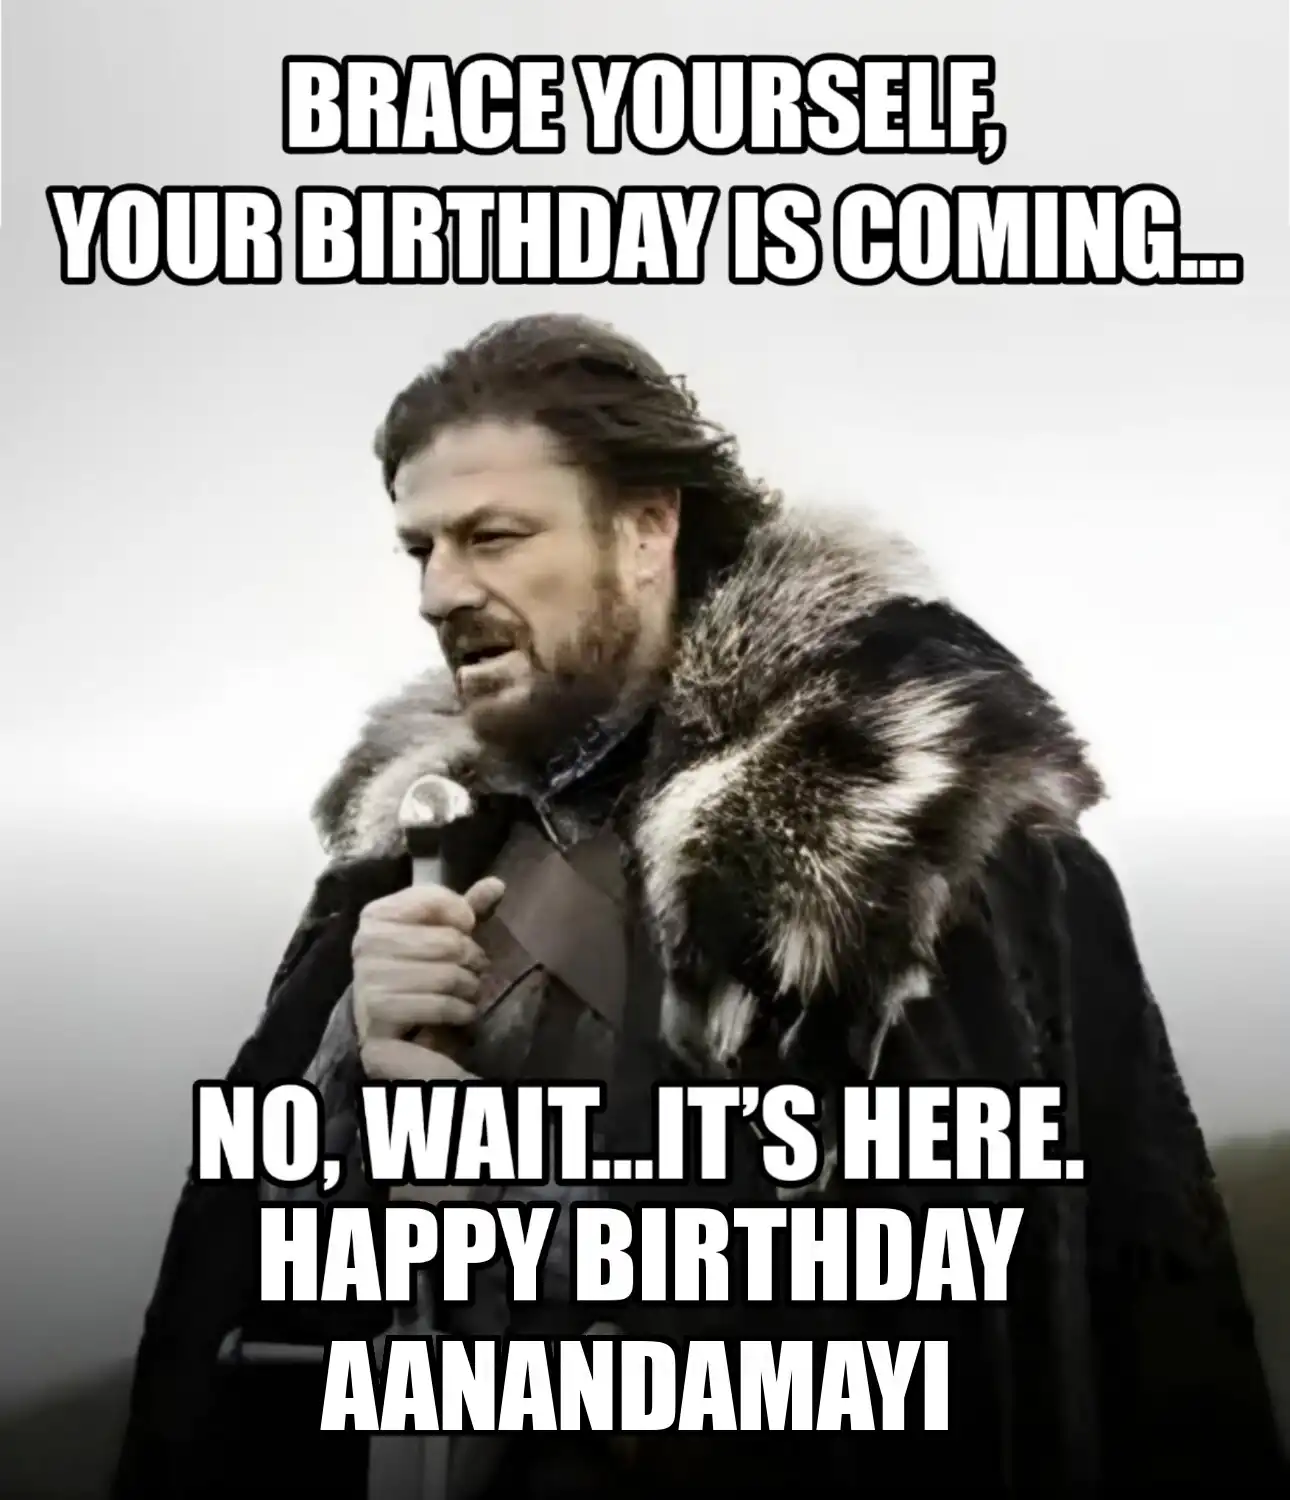 Happy Birthday Aanandamayi Brace Yourself Your Birthday Is Coming Meme